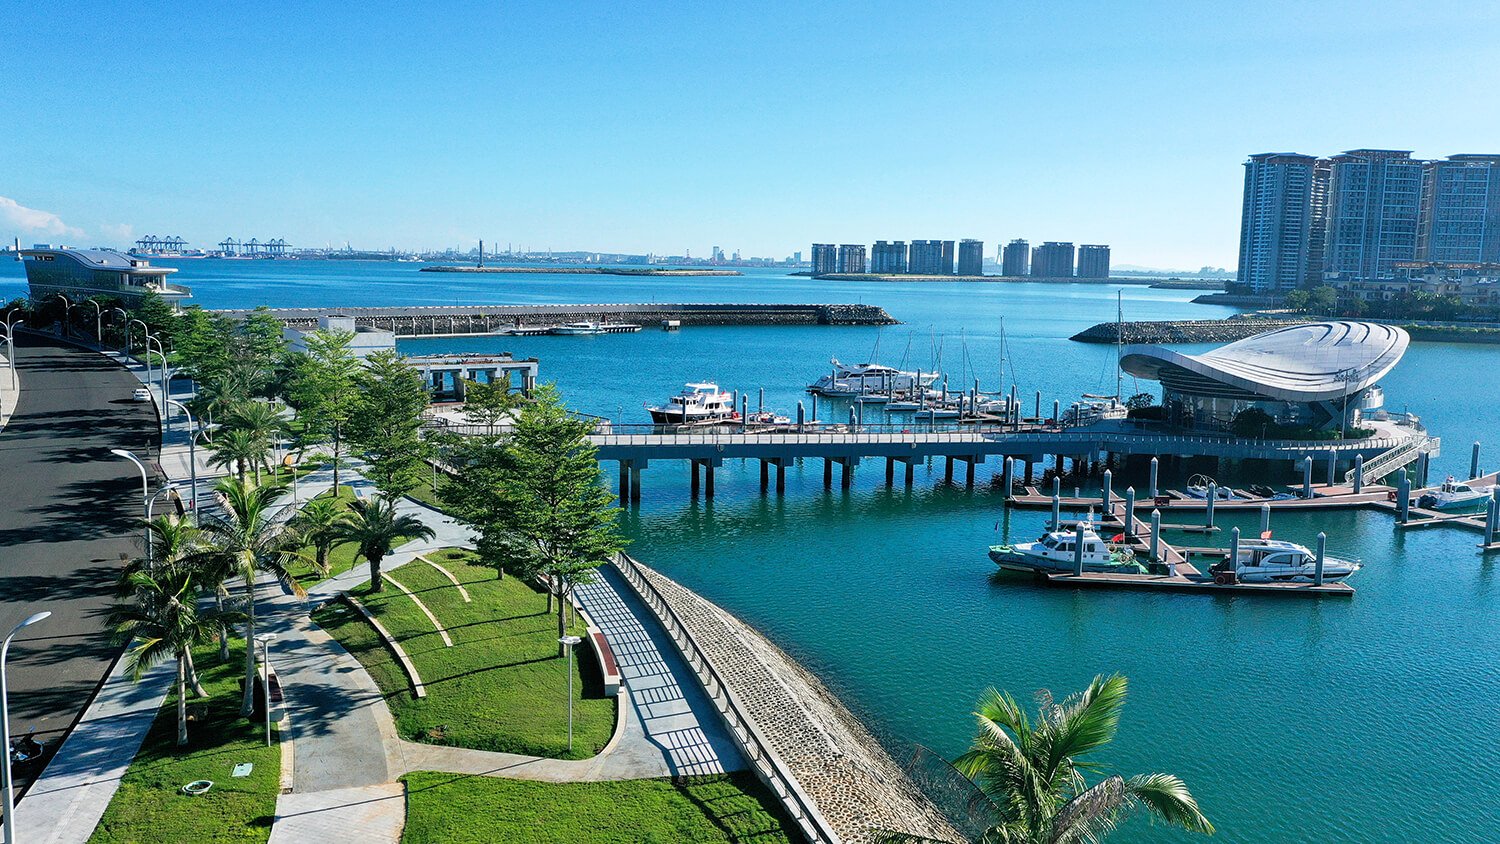 NDA-48. Hainan Sea Flower Yacht Club and Marina Commercial Promenade (4).jpg